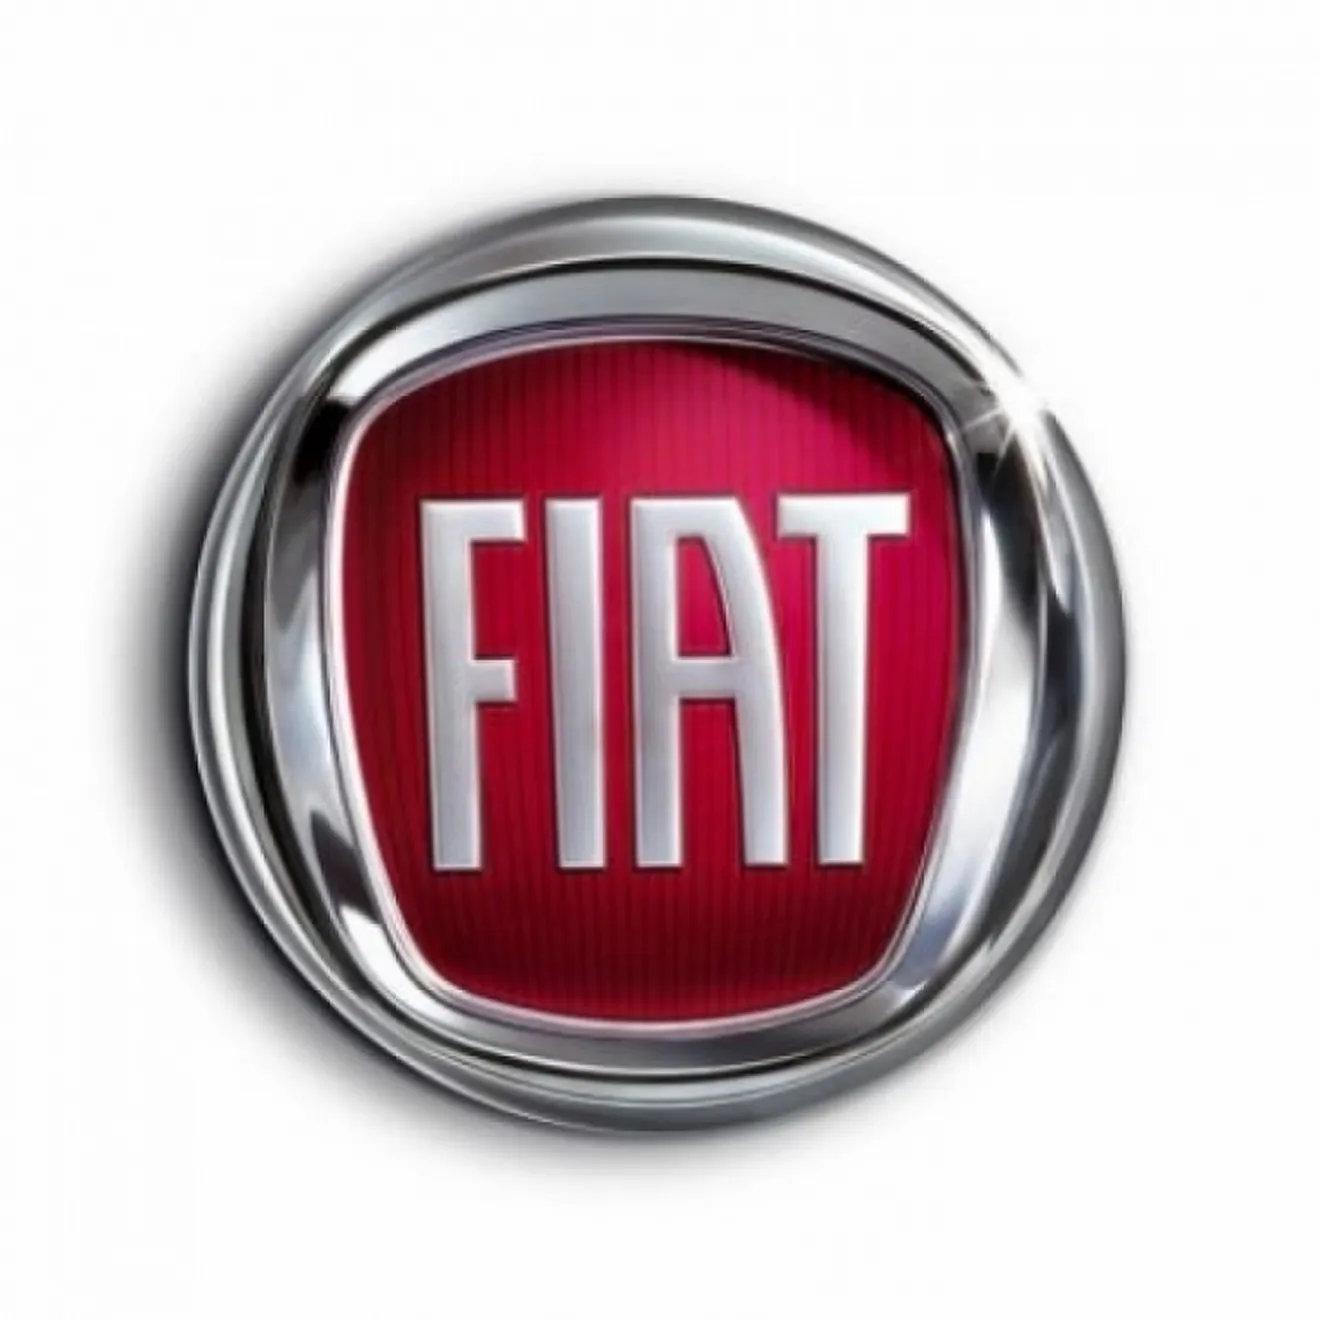 Ofertas Fiat, crédito sin intereses